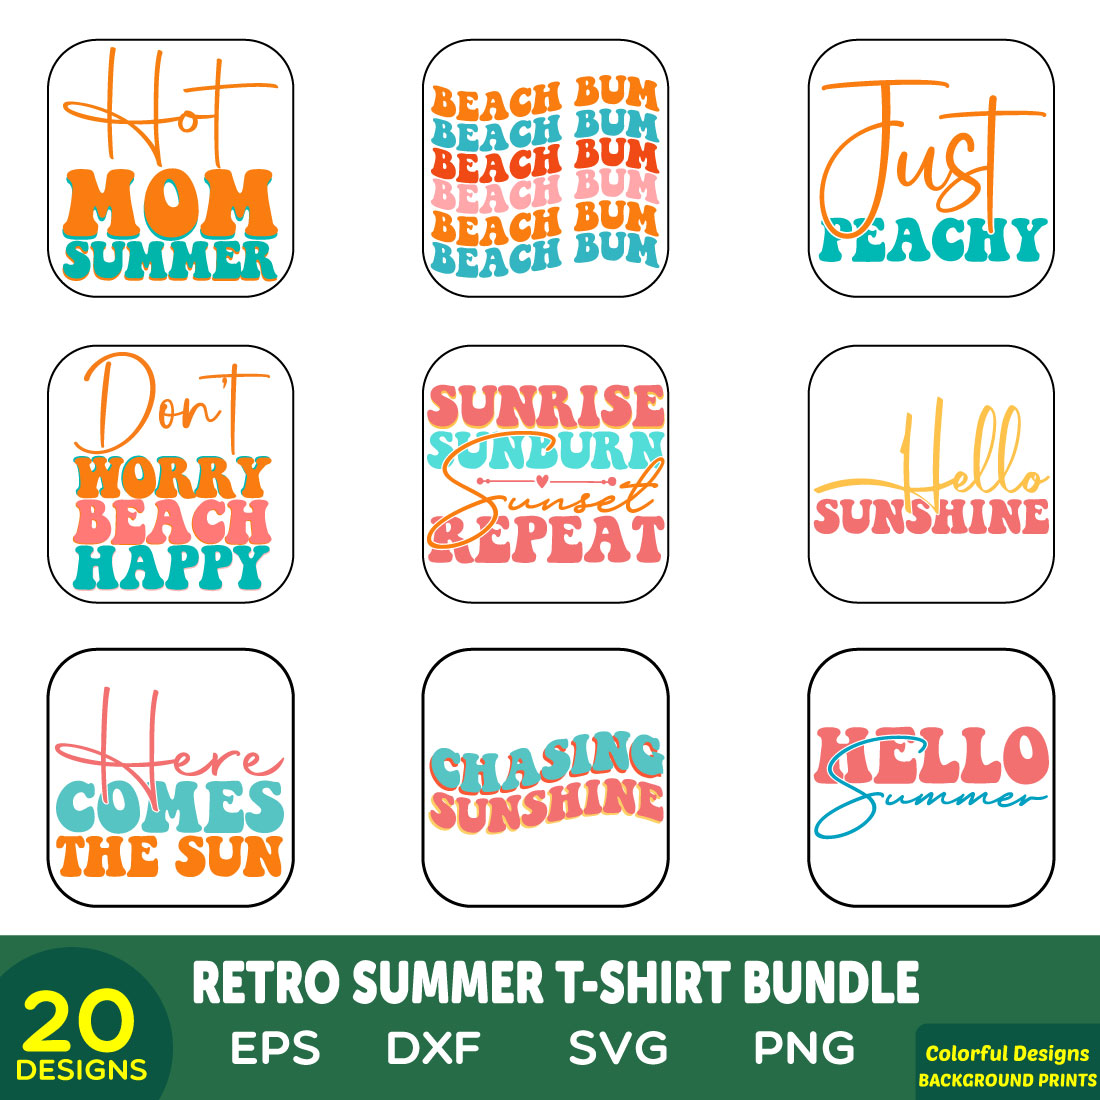 Retro Summer T-Shirt Bundle cover image.